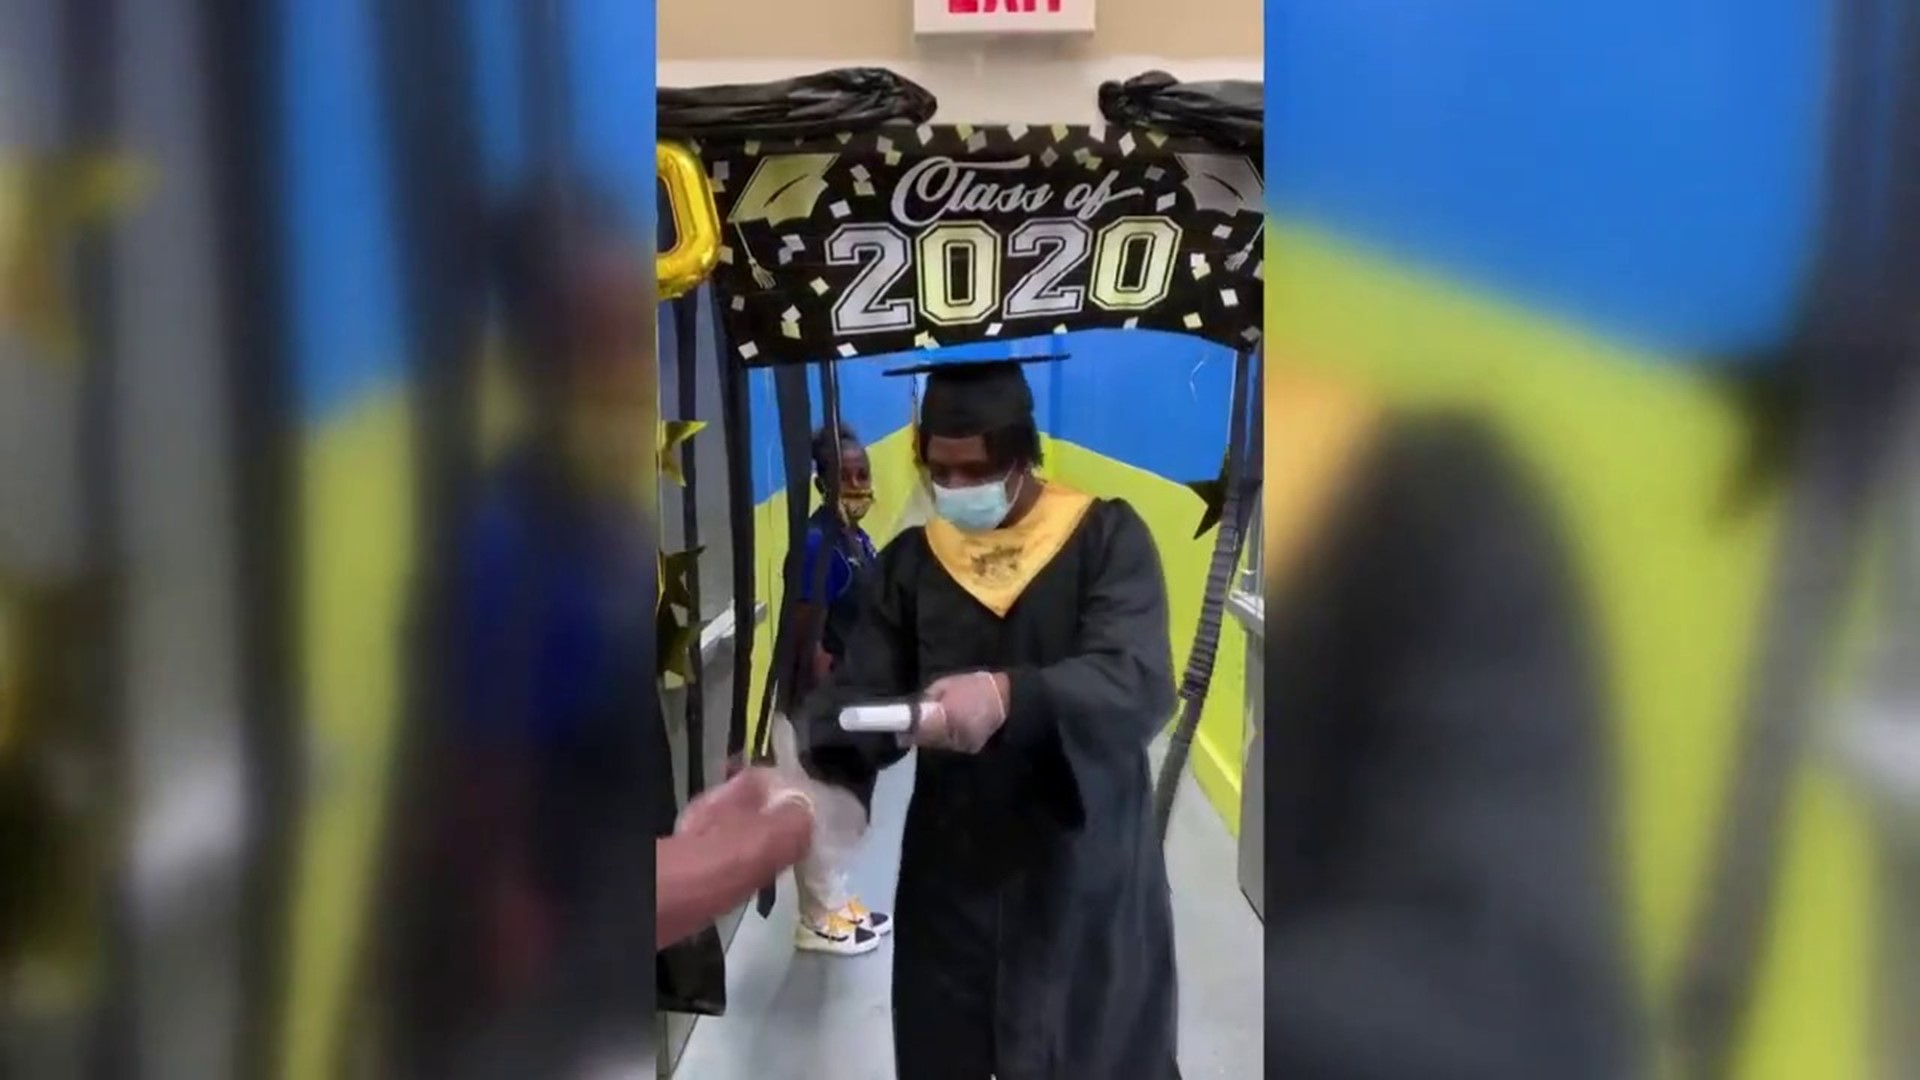 Georgia Walmart holds graduation ceremony